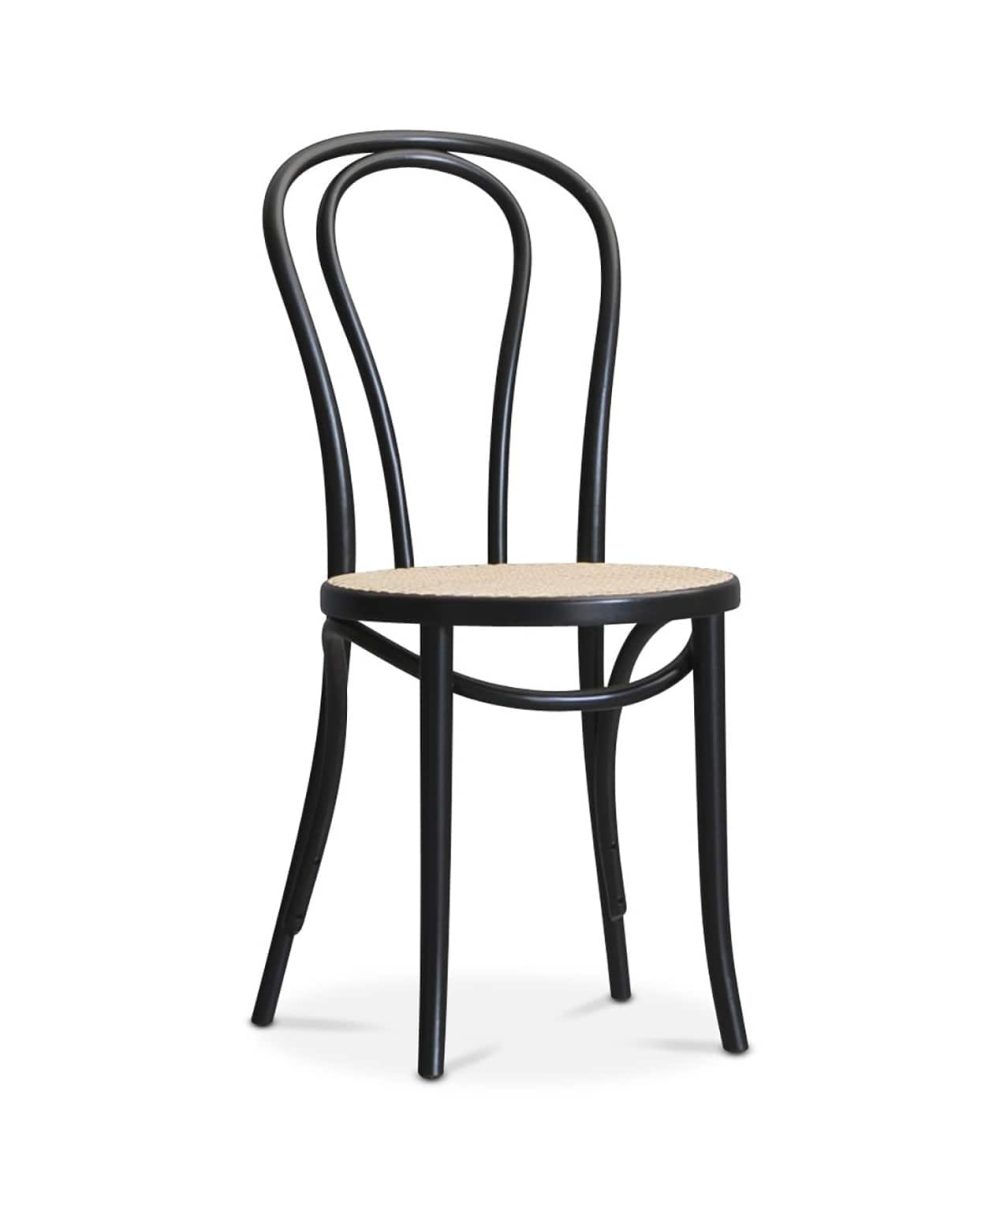 curved-no18-chair-black-profile.jpg